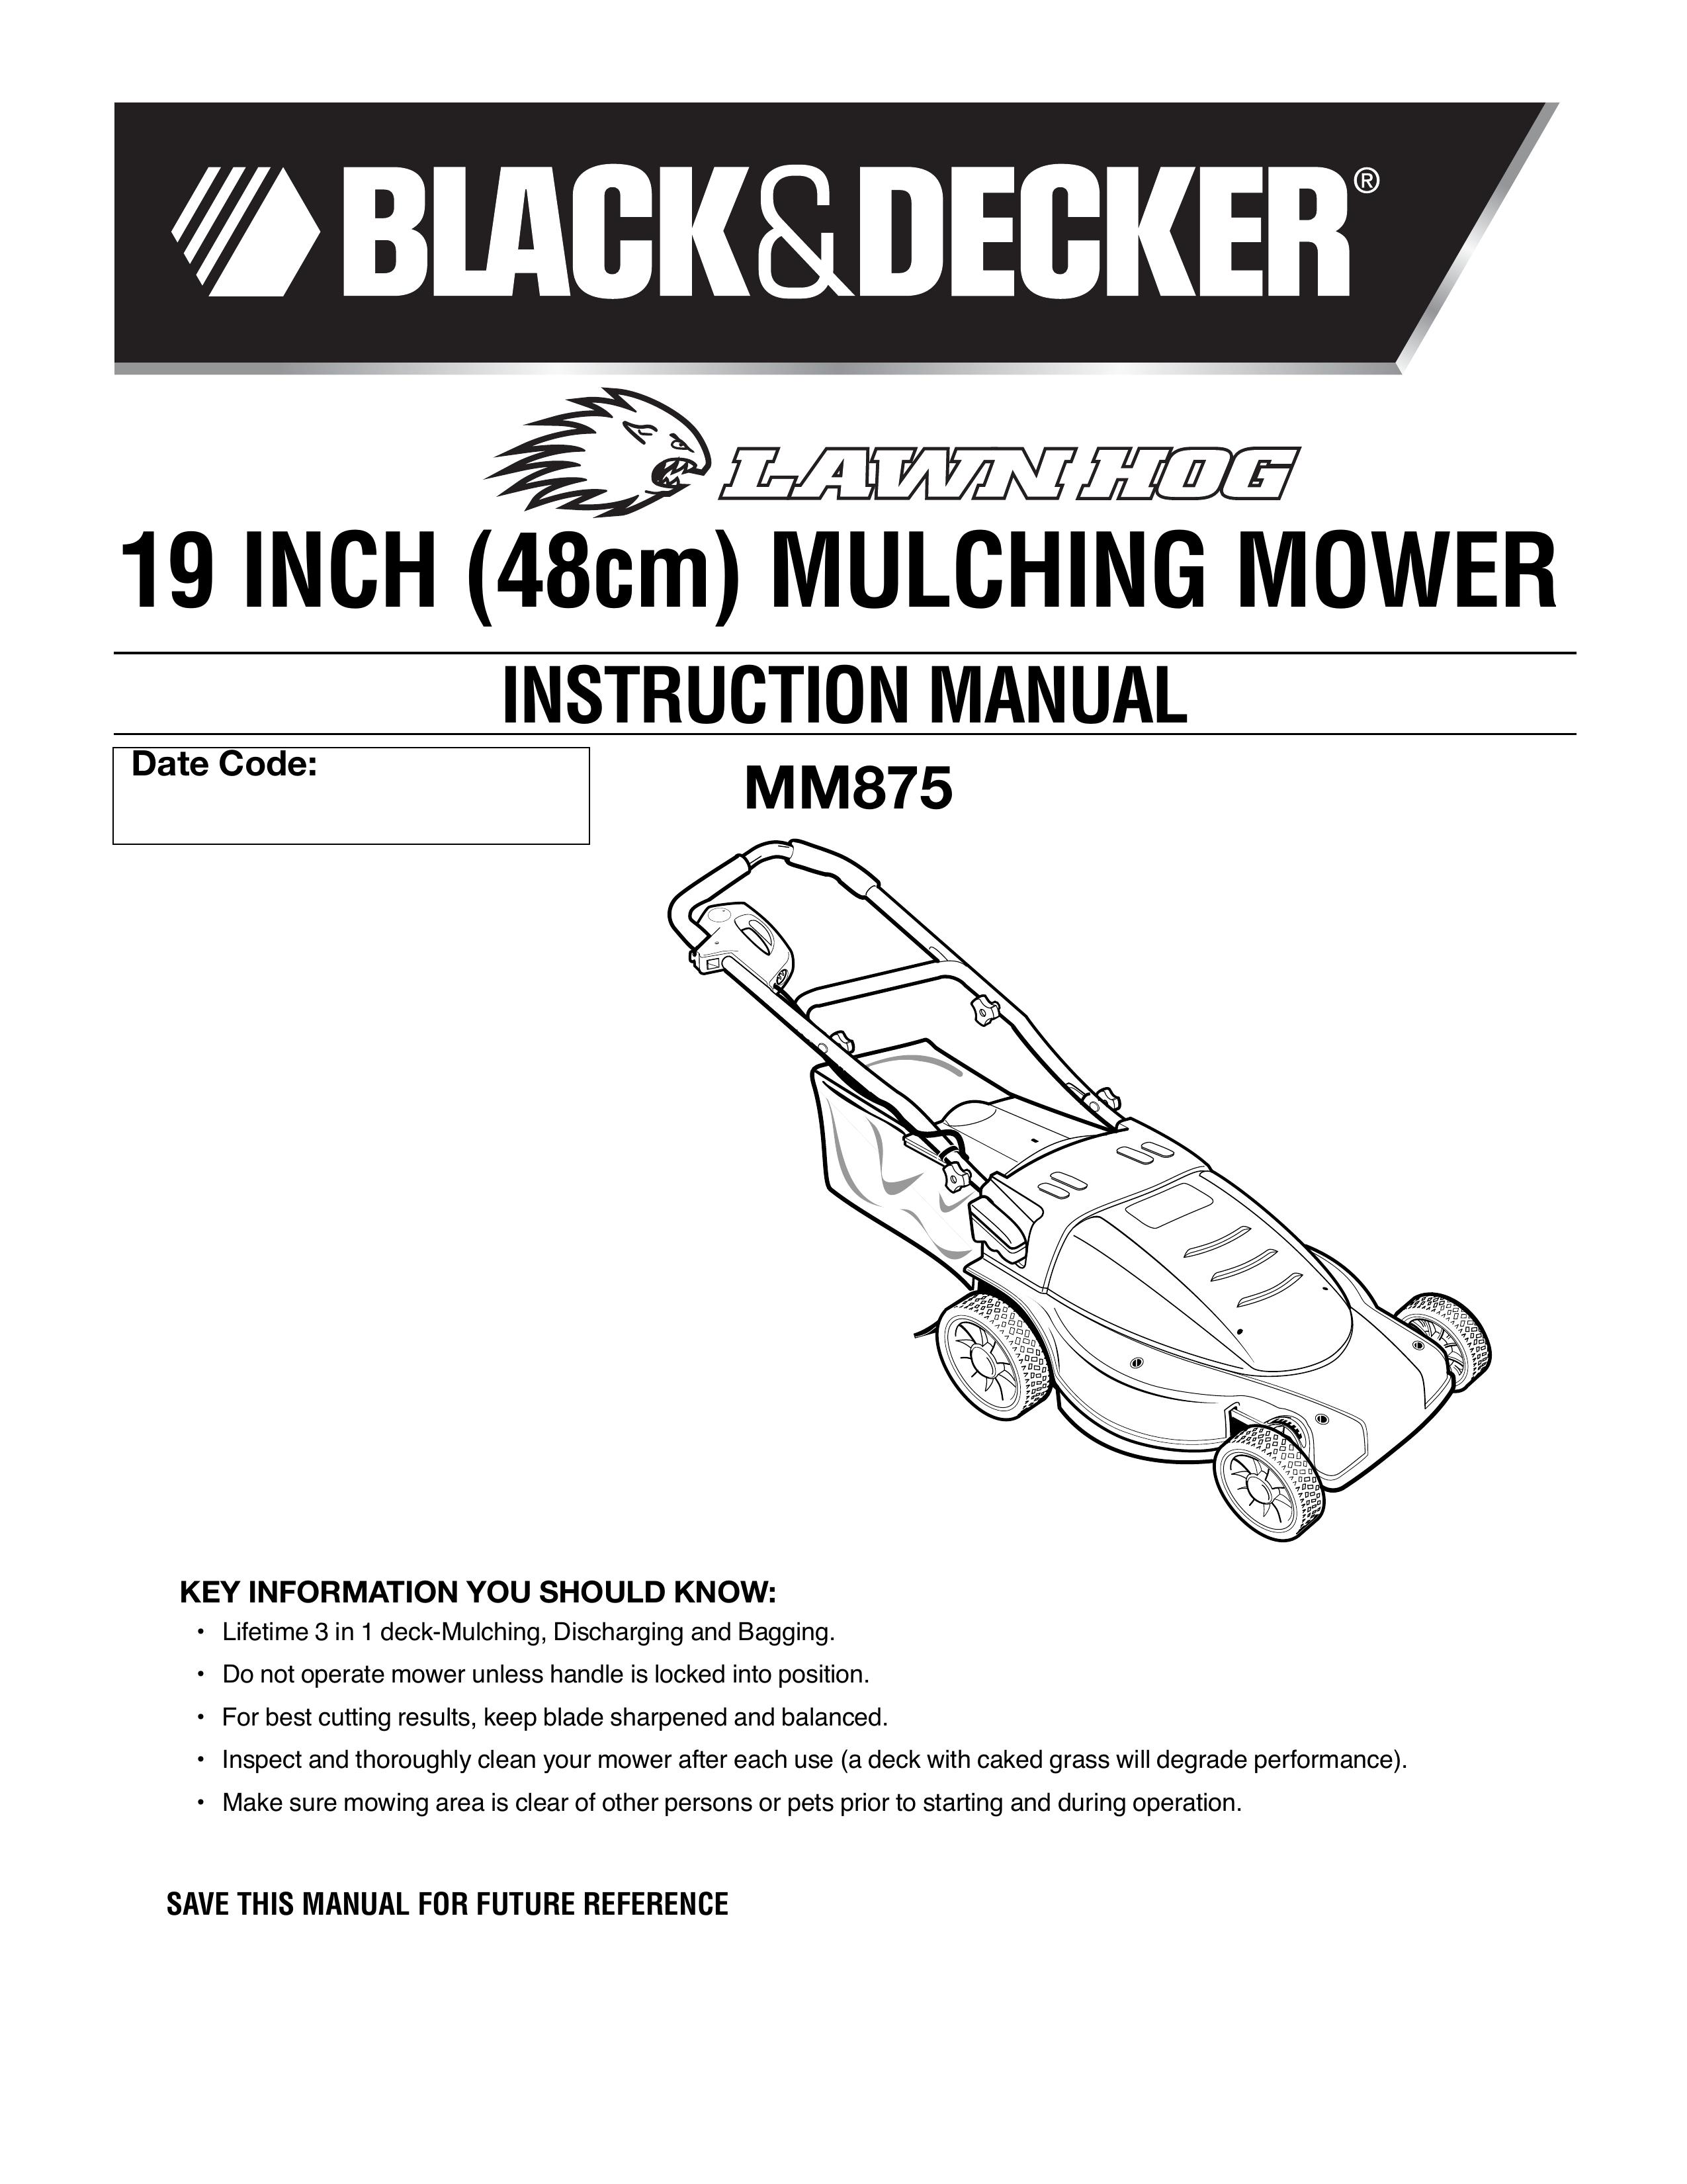 Black & Decker MM875 Lawn Mower User Manual